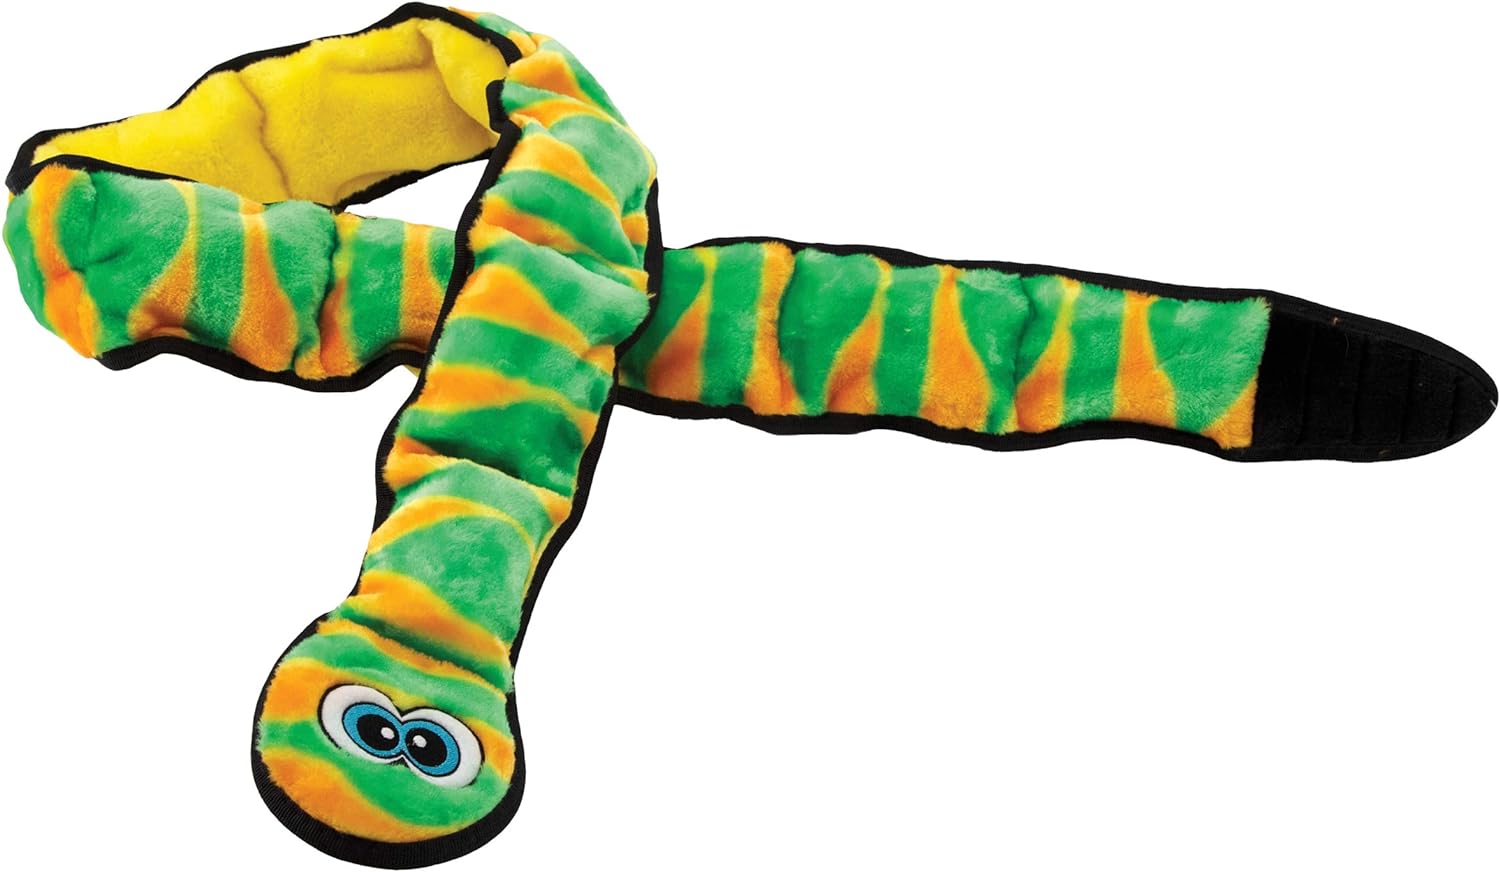 Outward Hound Durablez Tough Plush Squeaky Dog Toy - Snake, Blue, Large